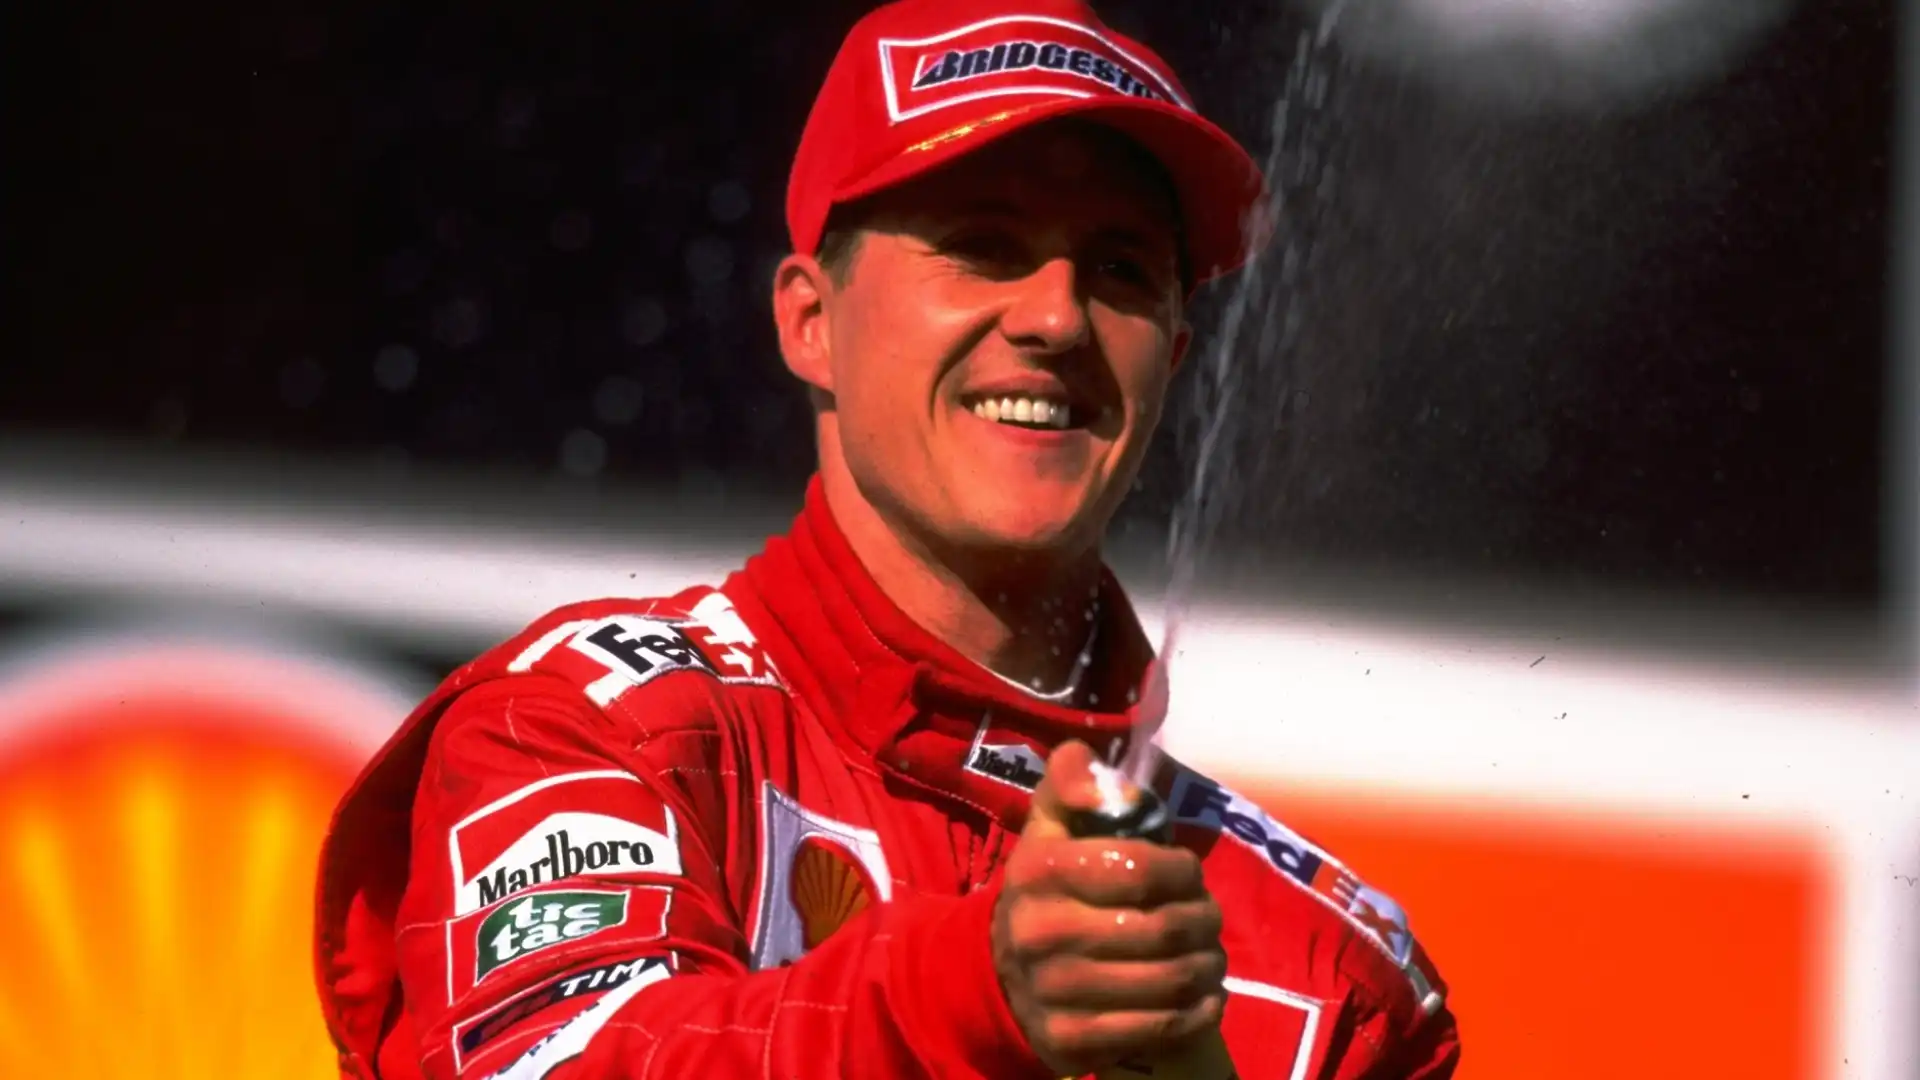 1999: Michael Schumacher (Formula 1), guadagni totali stimati 49 milioni di dollari